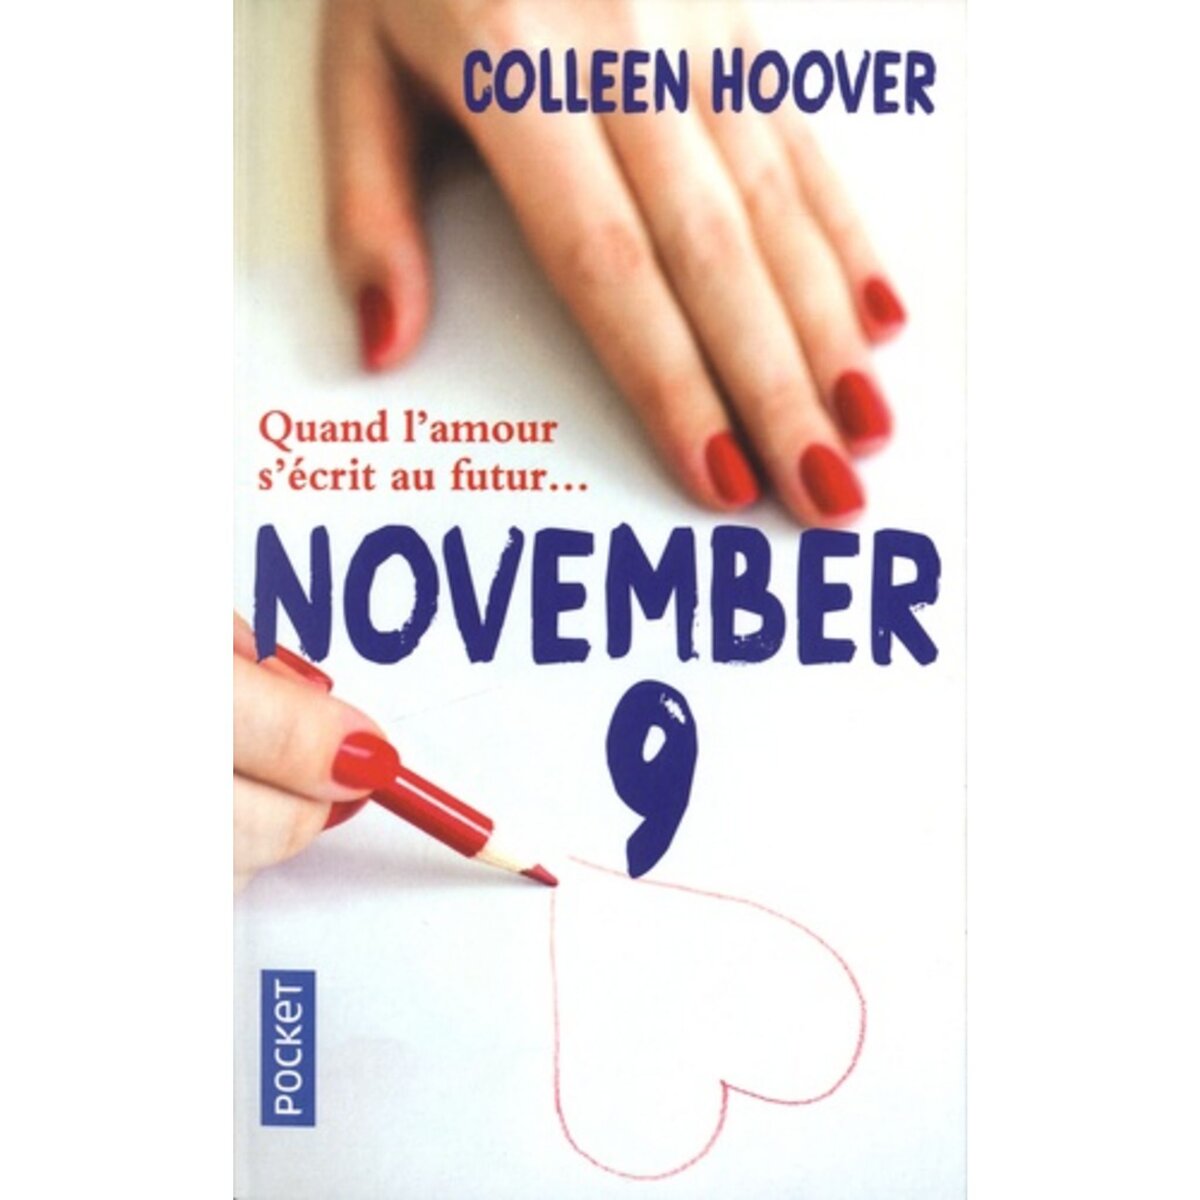  NOVEMBER 9, Hoover Colleen